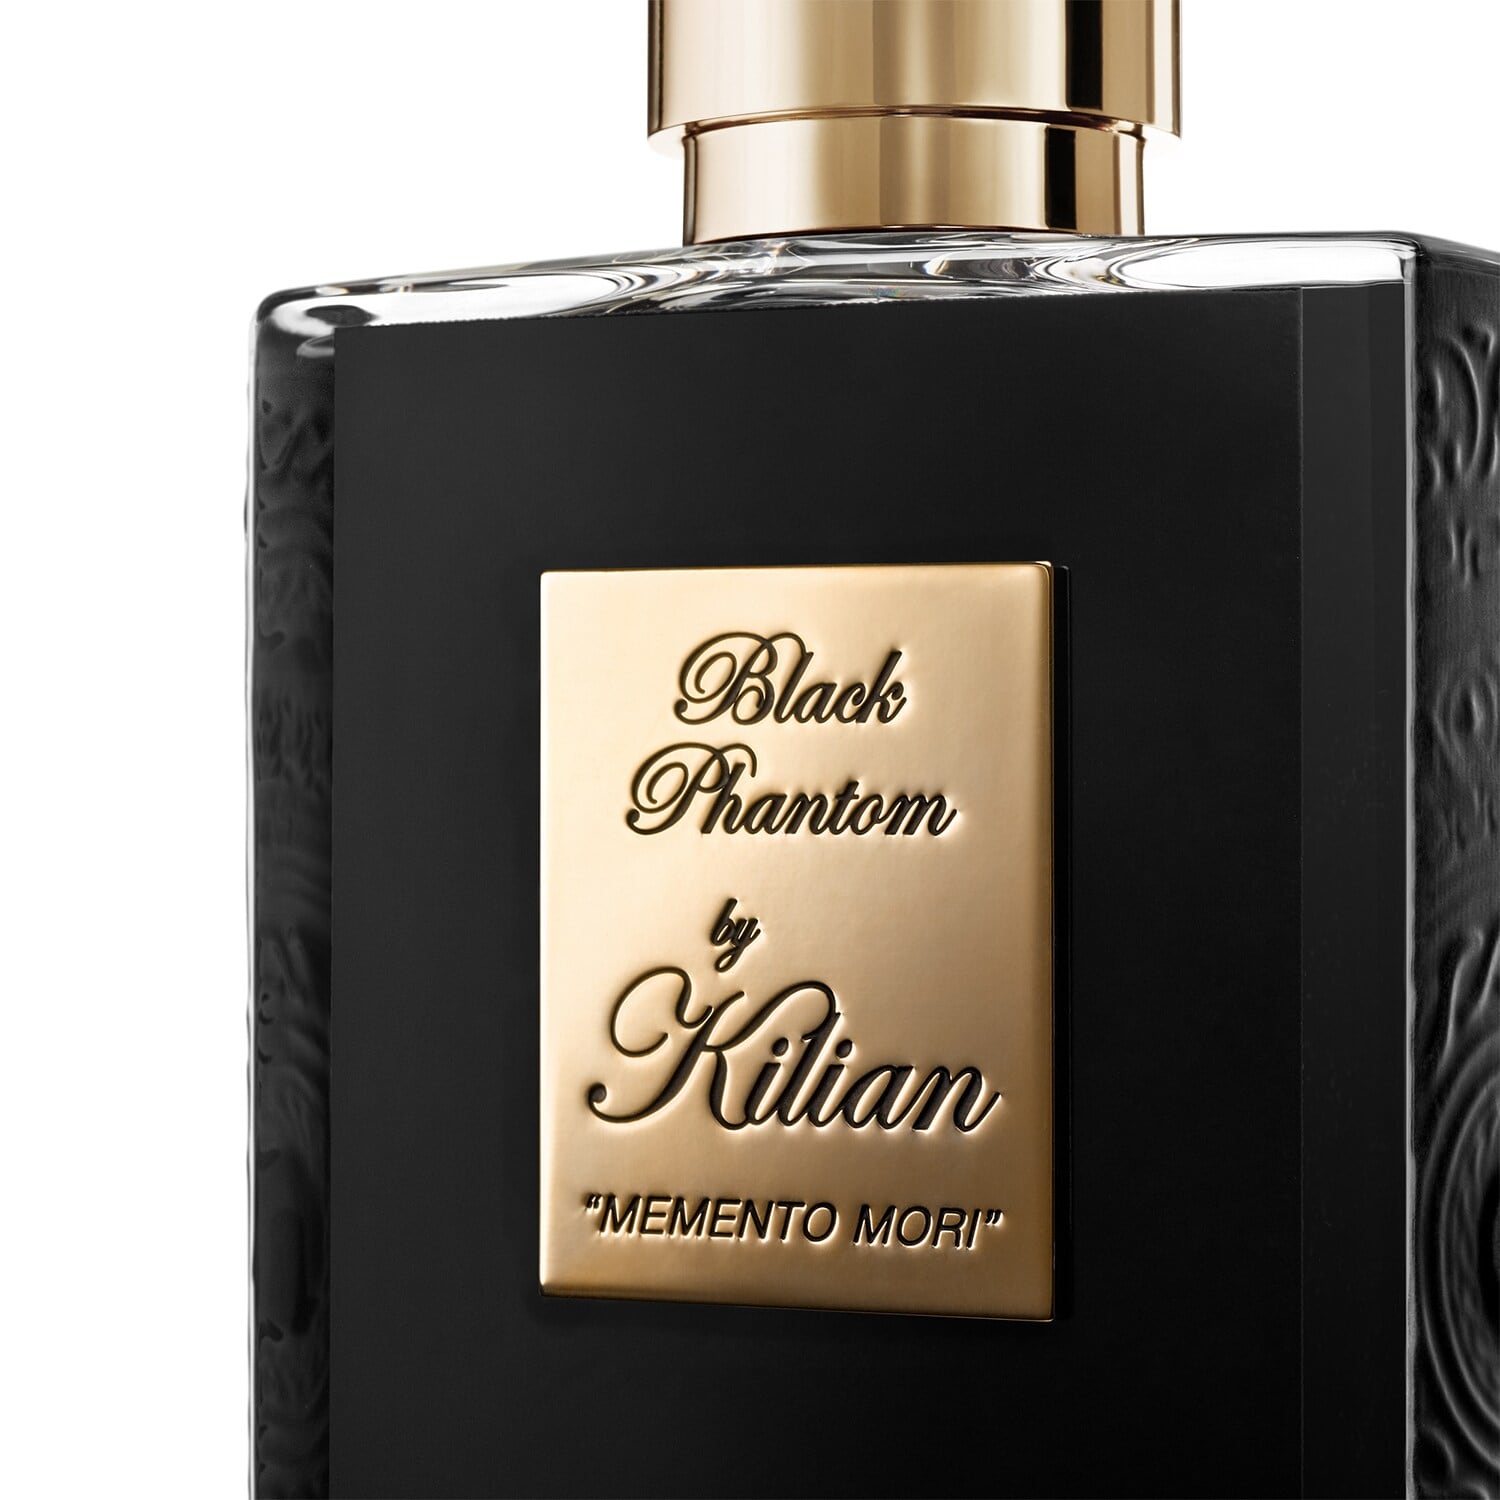 Kilian Black Phantom "Memento Mori" EDP | My Perfume Shop Australia